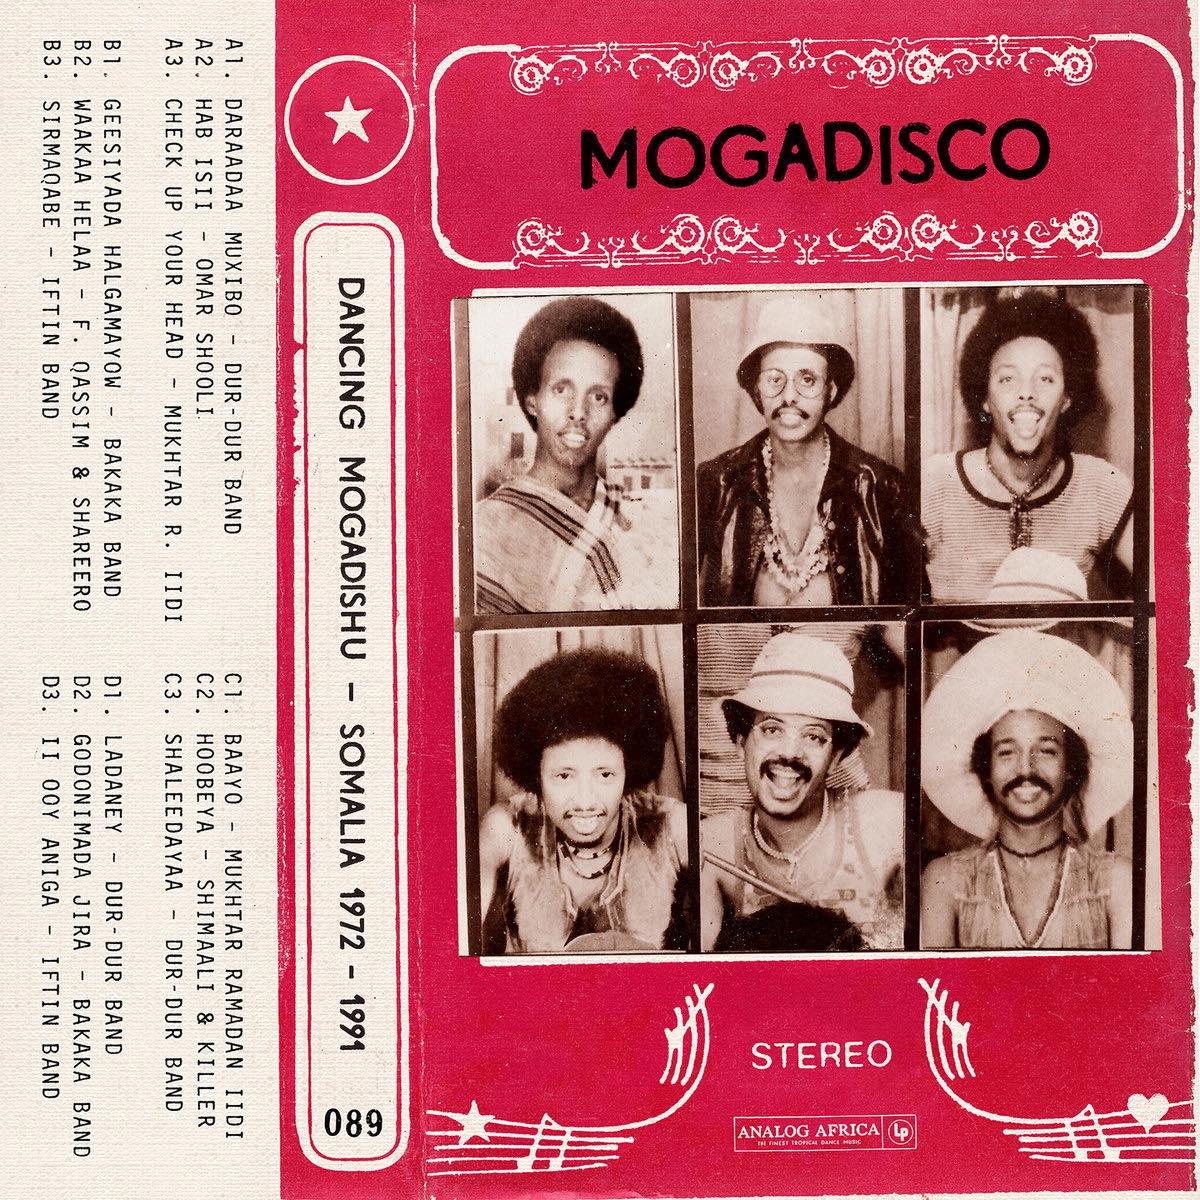 Mogadisco - Dancing Mogadishu - Somalia 1972-1991 (Analog Africa Nr. 29)